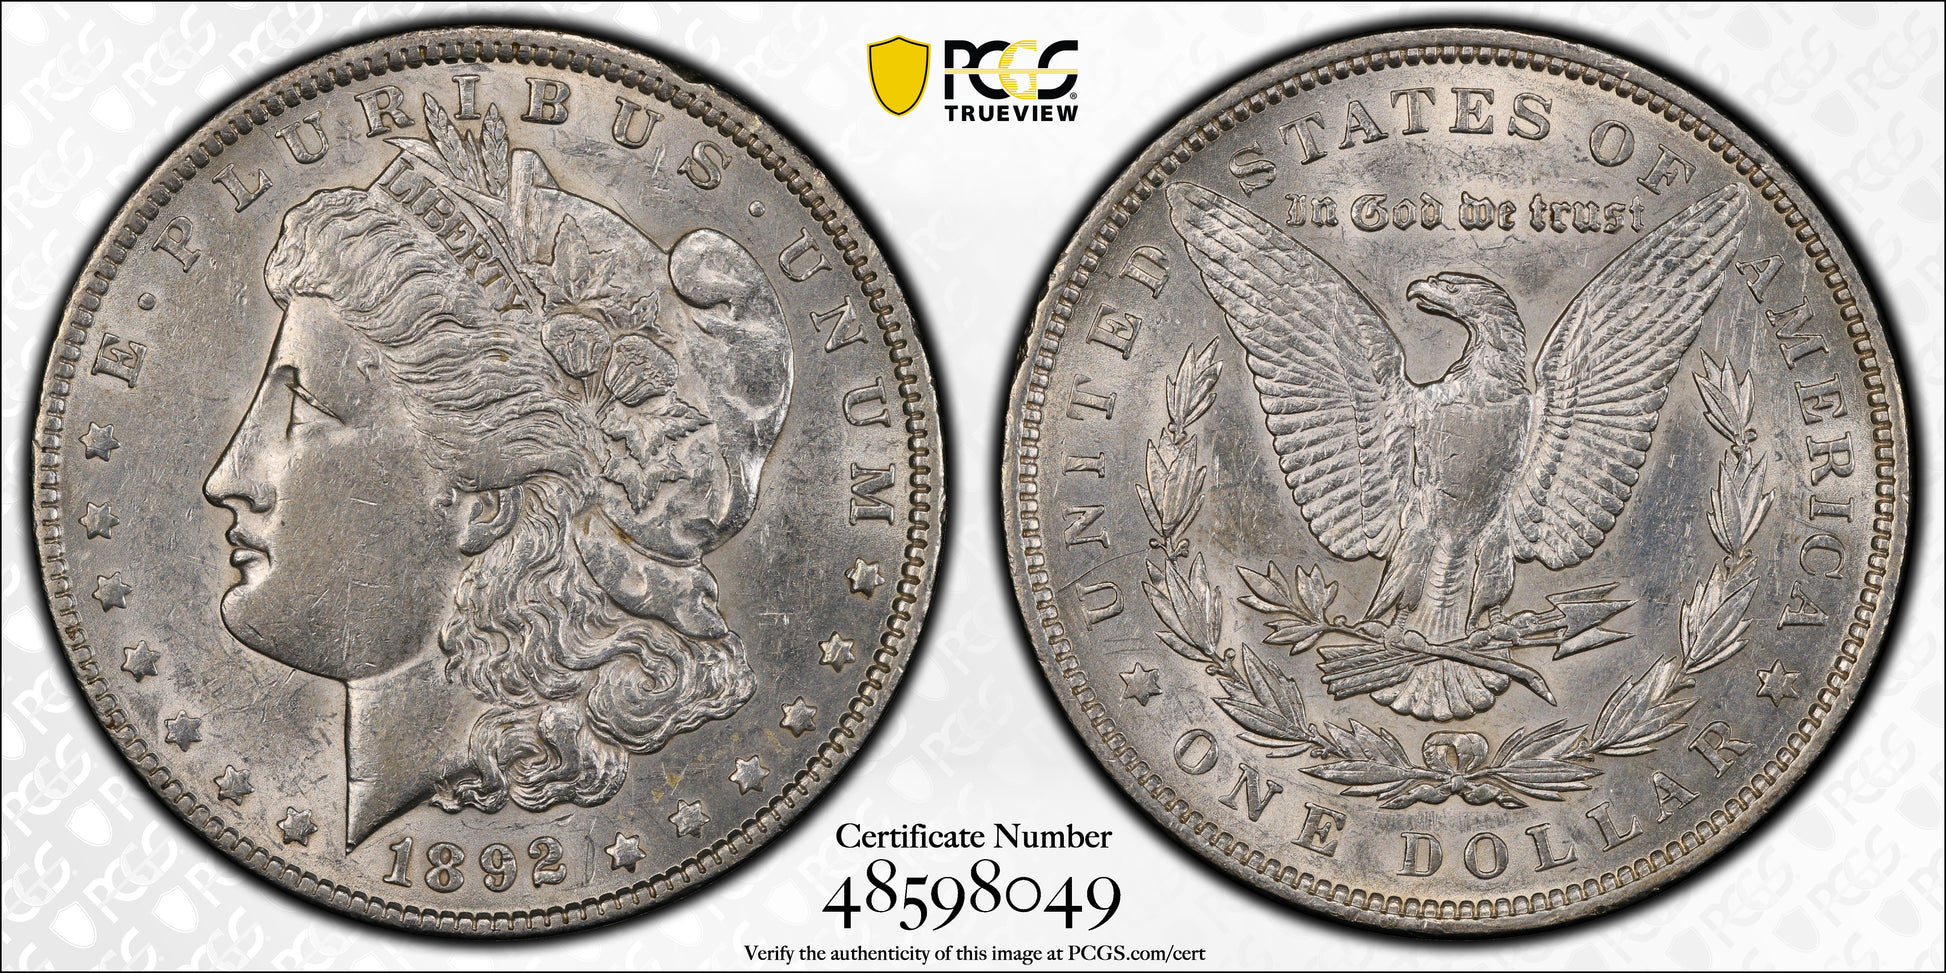 1892 Morgan Dollar $1 PCGS AU50 Trueview